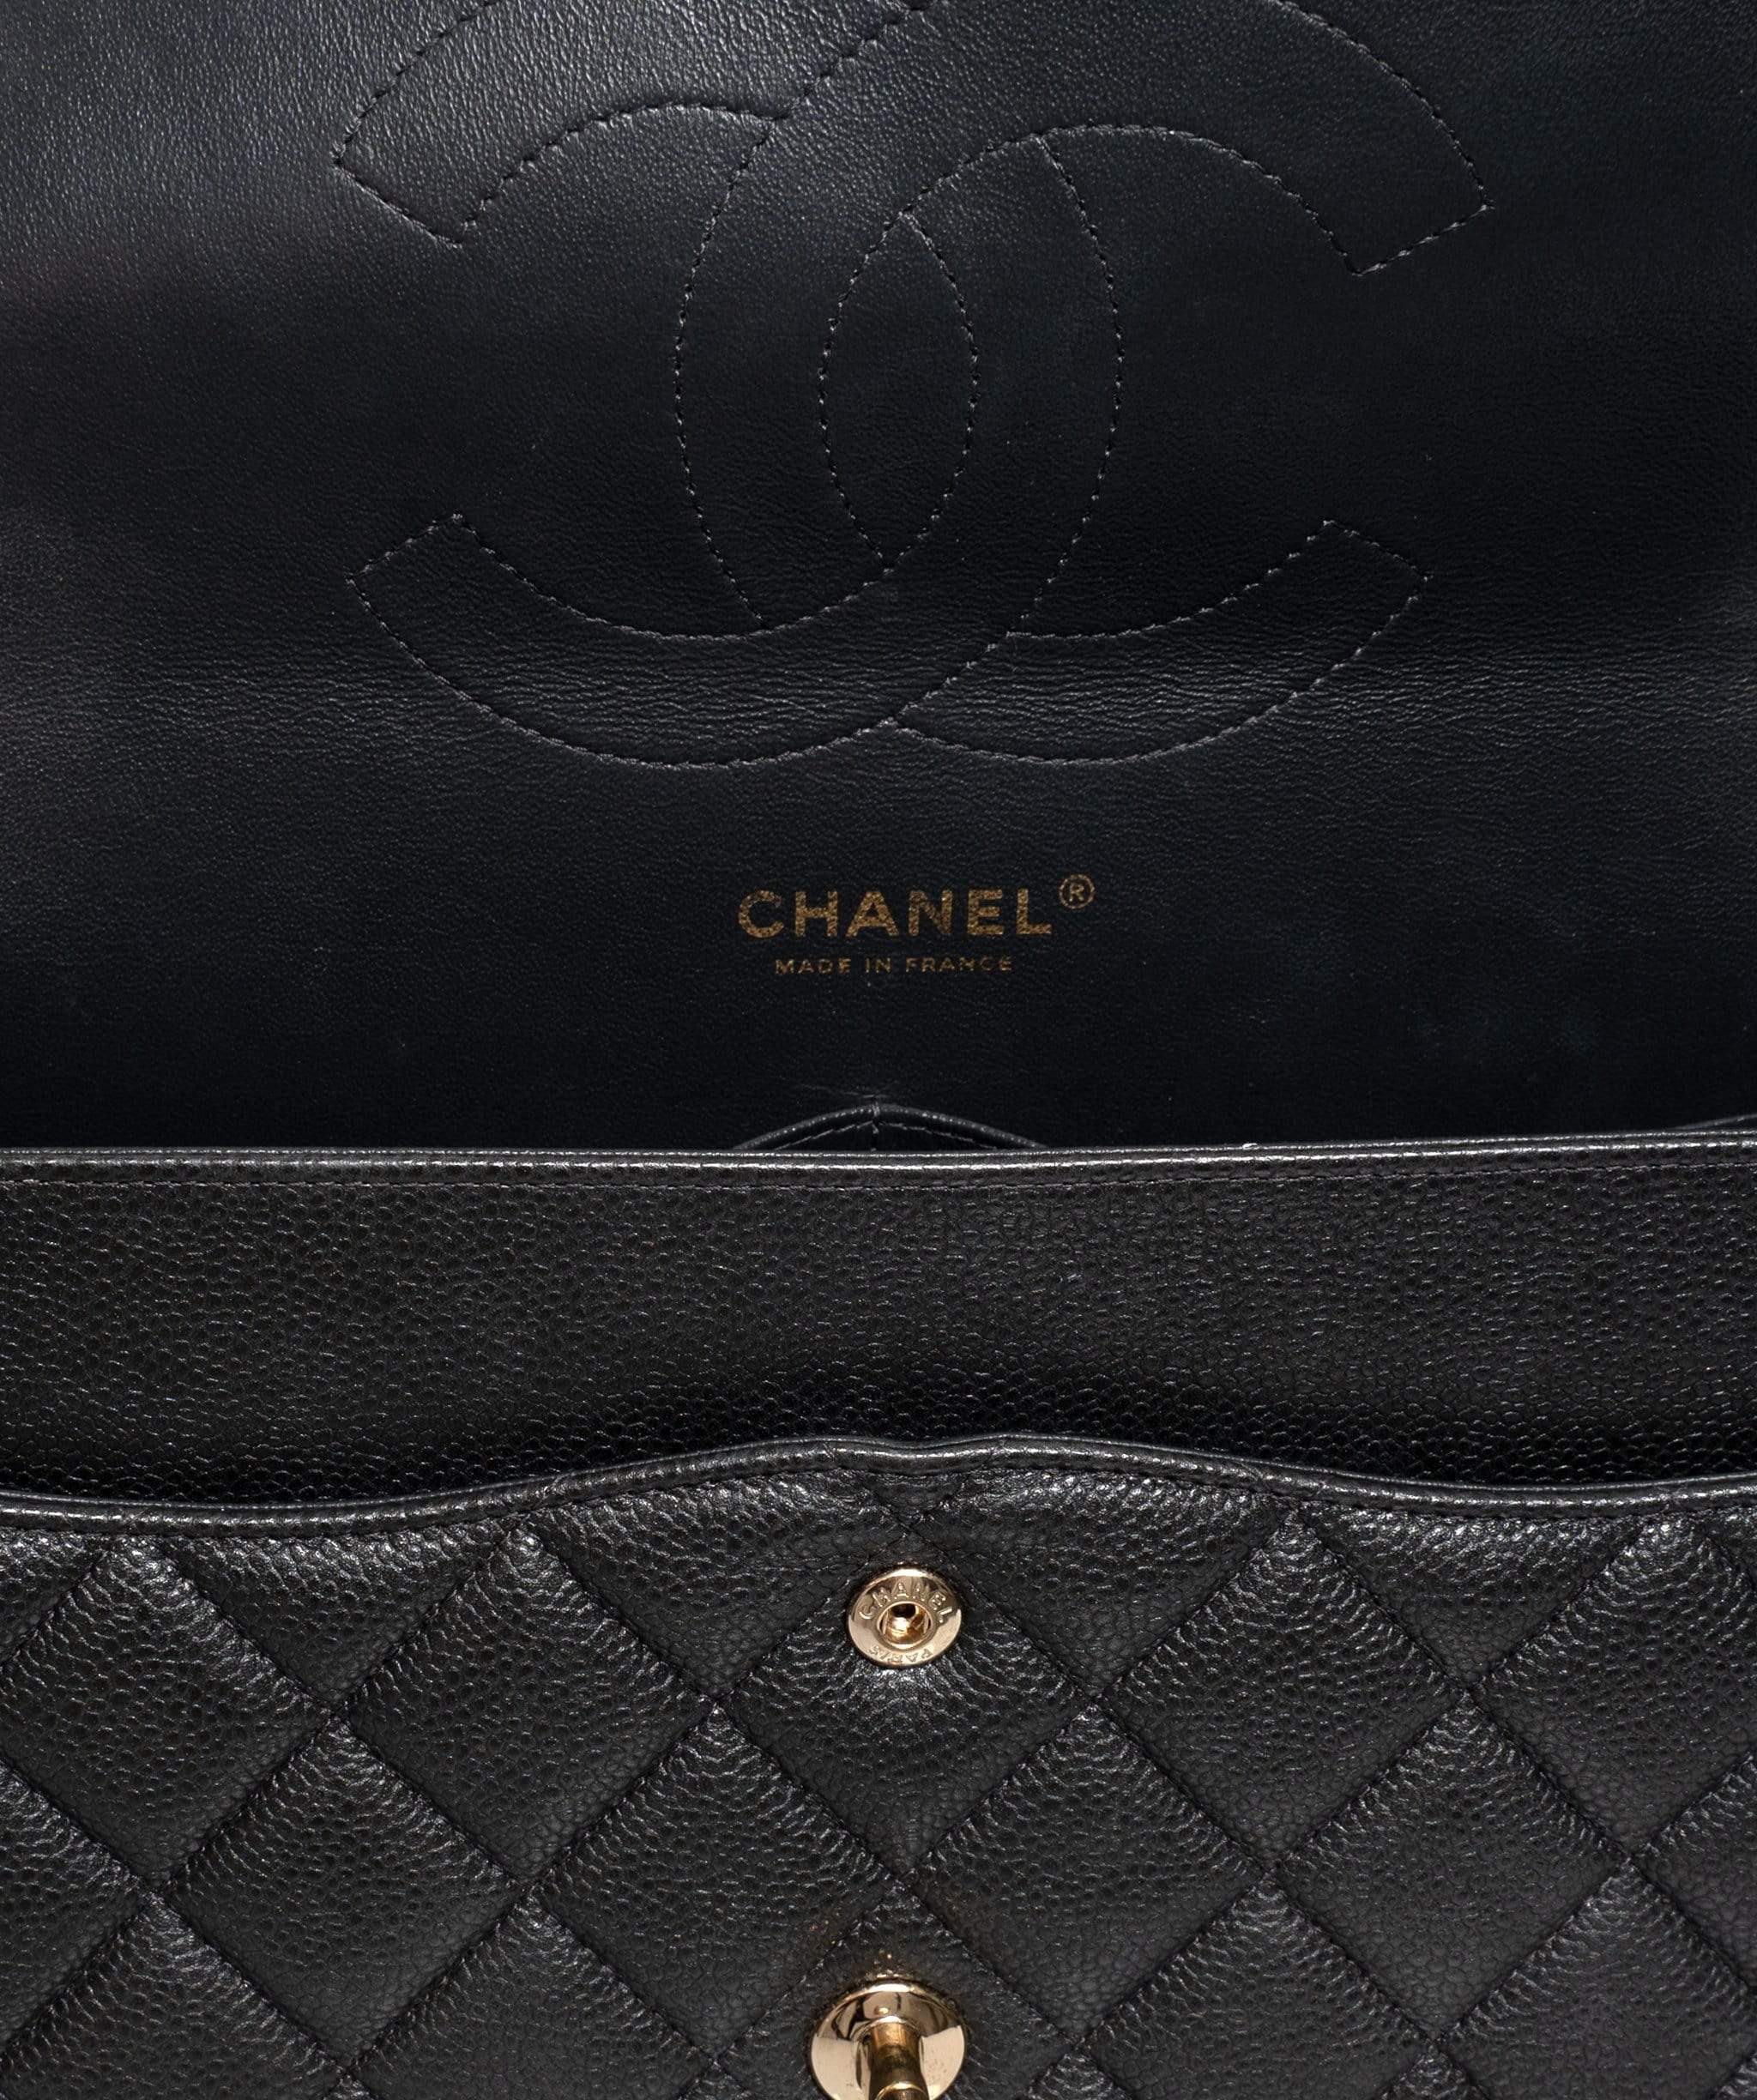 Chanel Chanel Dark Grey Caviar Skin Jumbo Classic Flap Bag - ASL1609